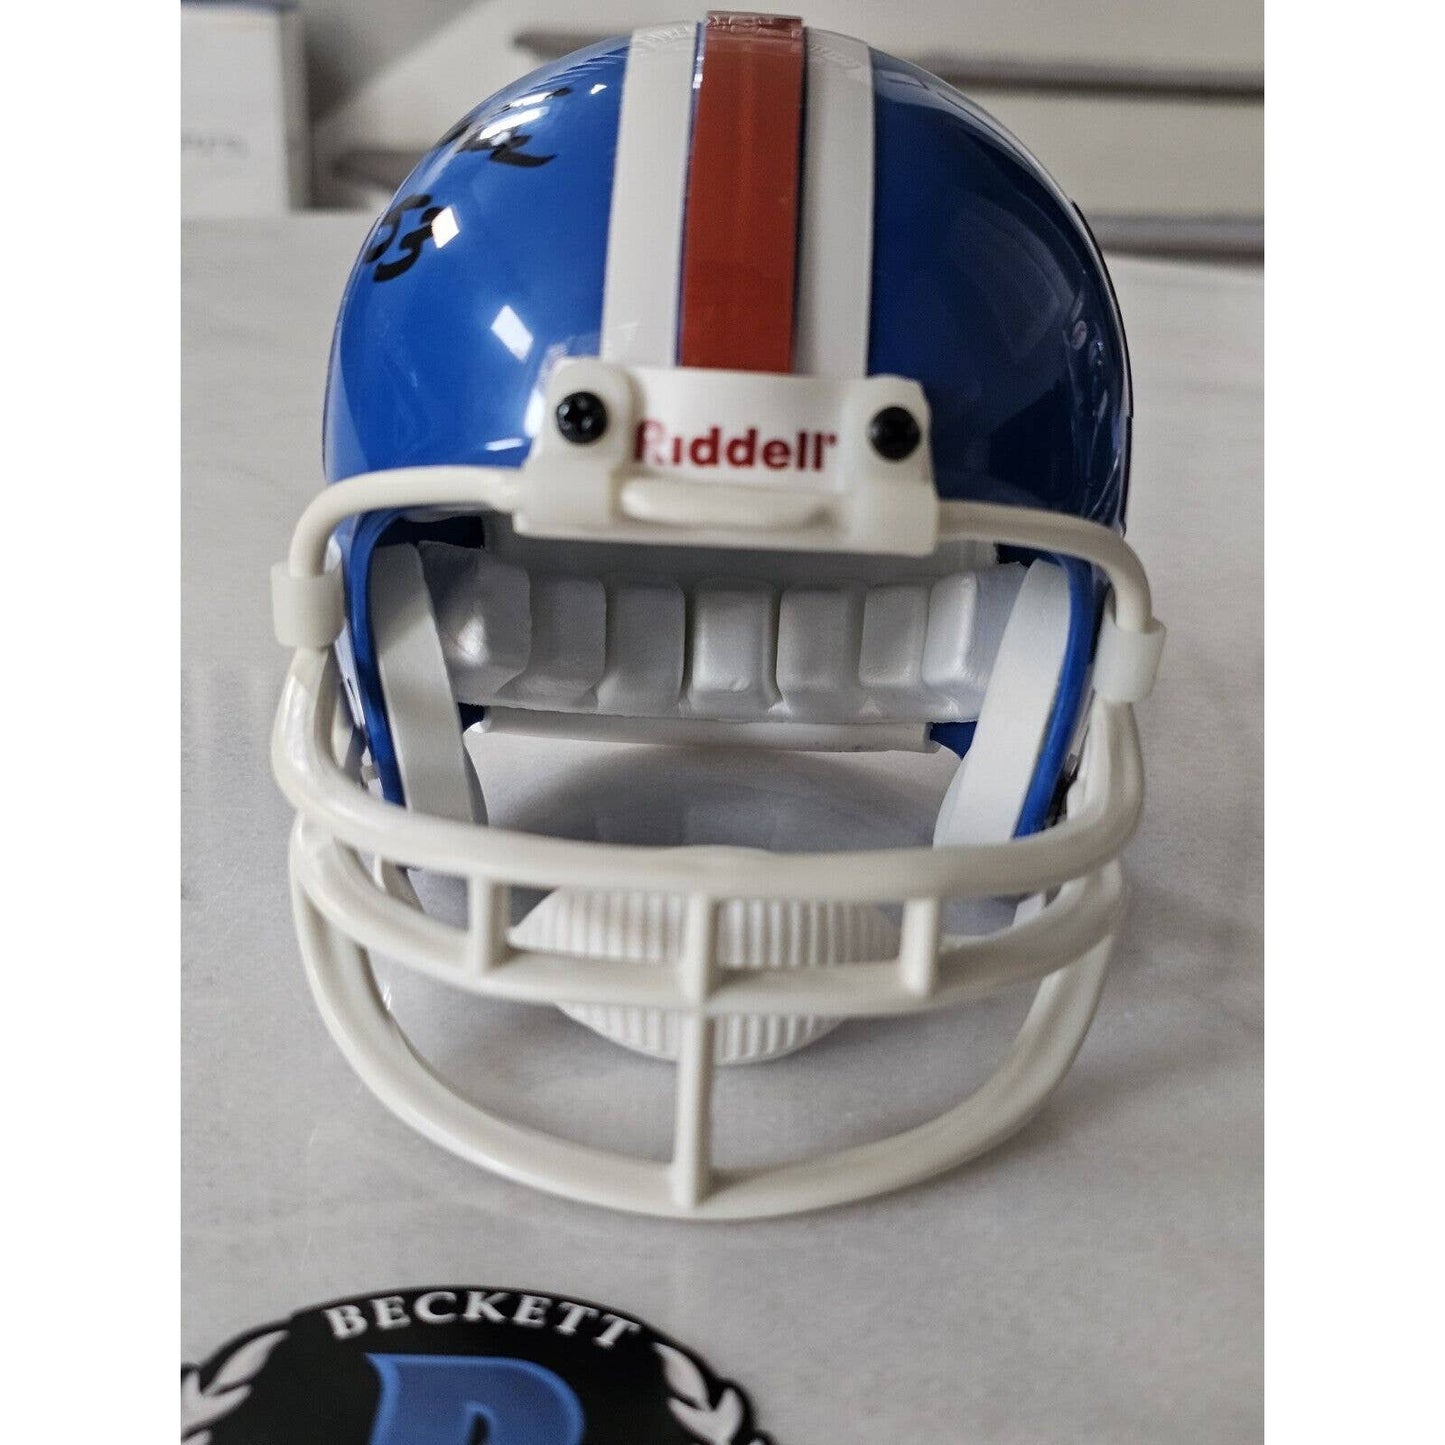 Randy Gradishar Autographed/Signed Mini Helmet Beckett Denver Broncos Throwback